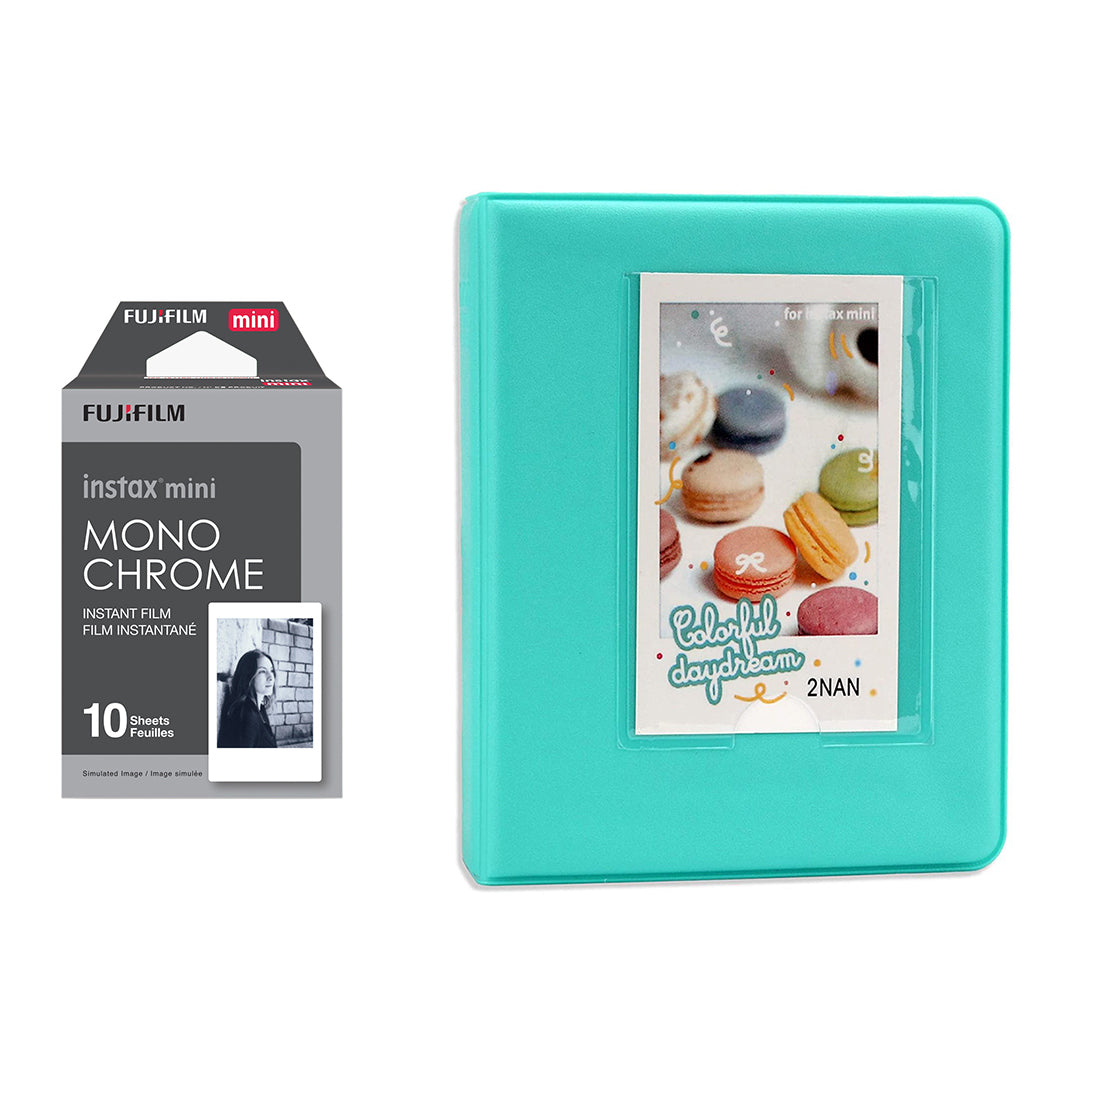 Fujifilm Instax Mini 10X1 Monochrome Instant Film with Instax Time Photo Album 64 Sheets Mint Green